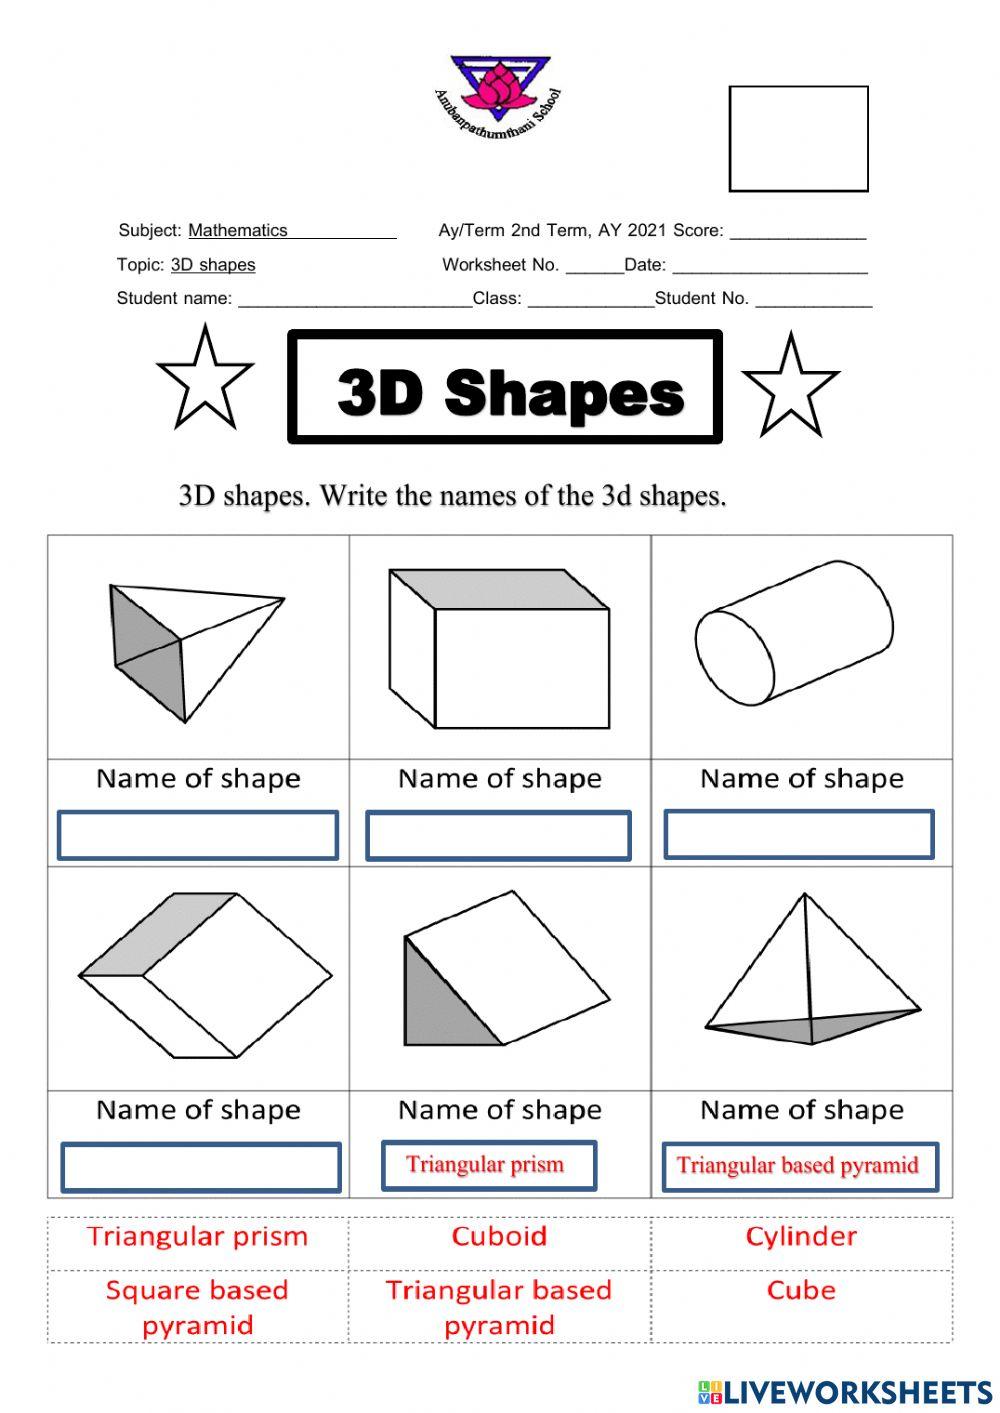 3D shapes